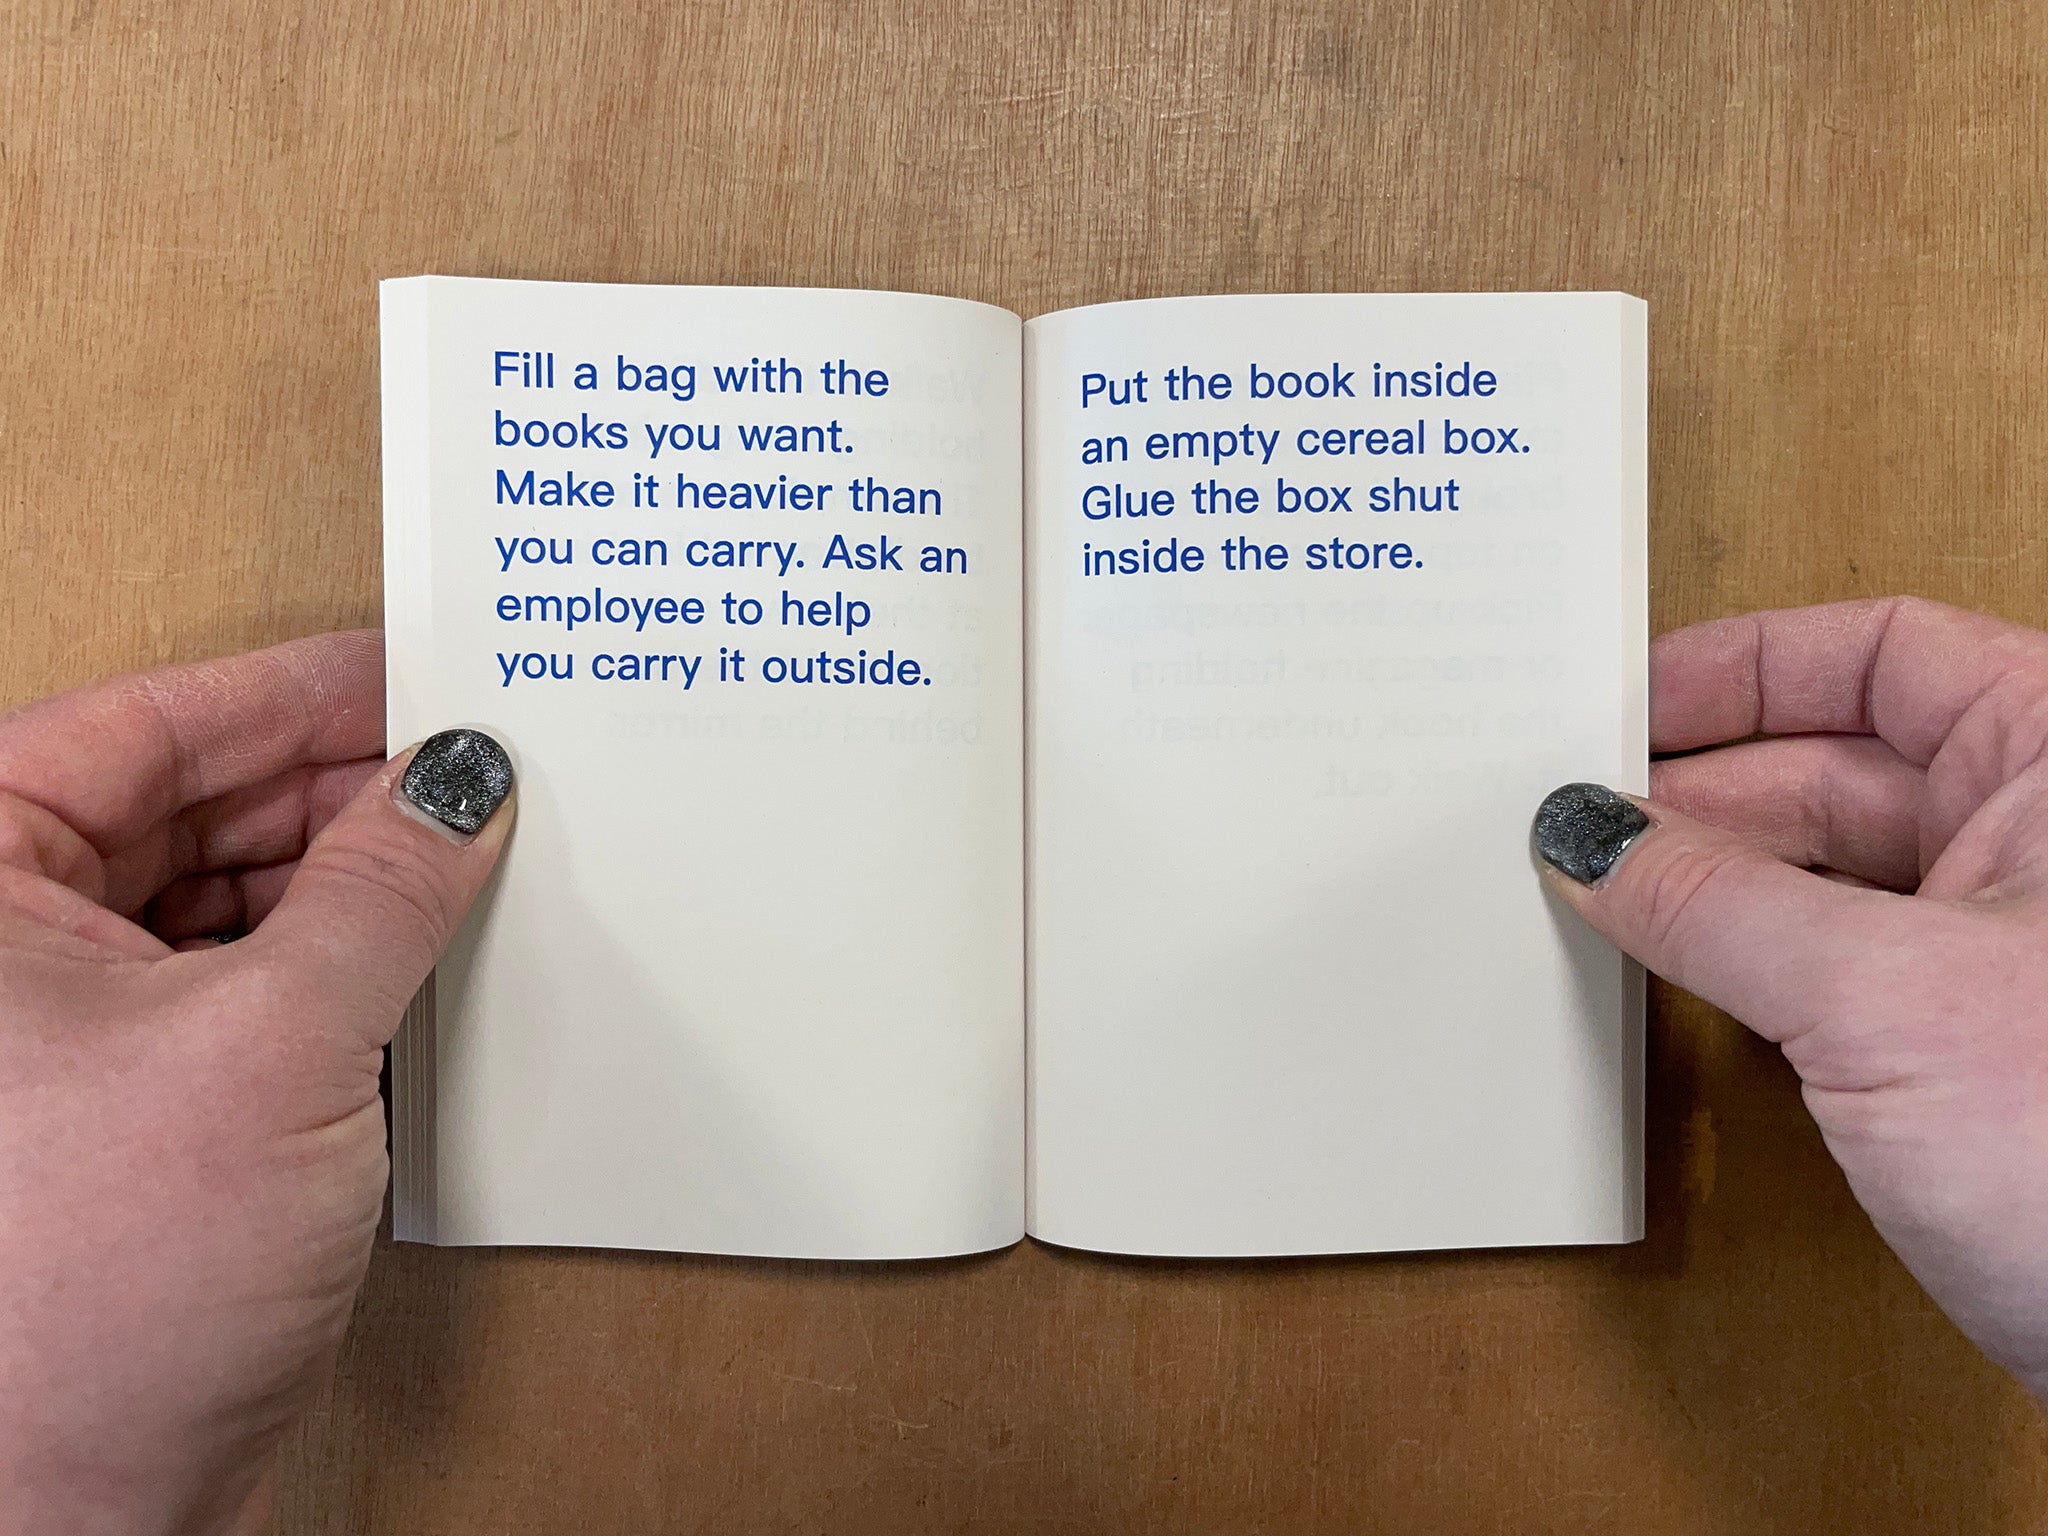 HOW TO SHOPLIFT BOOKS by David Horvitz